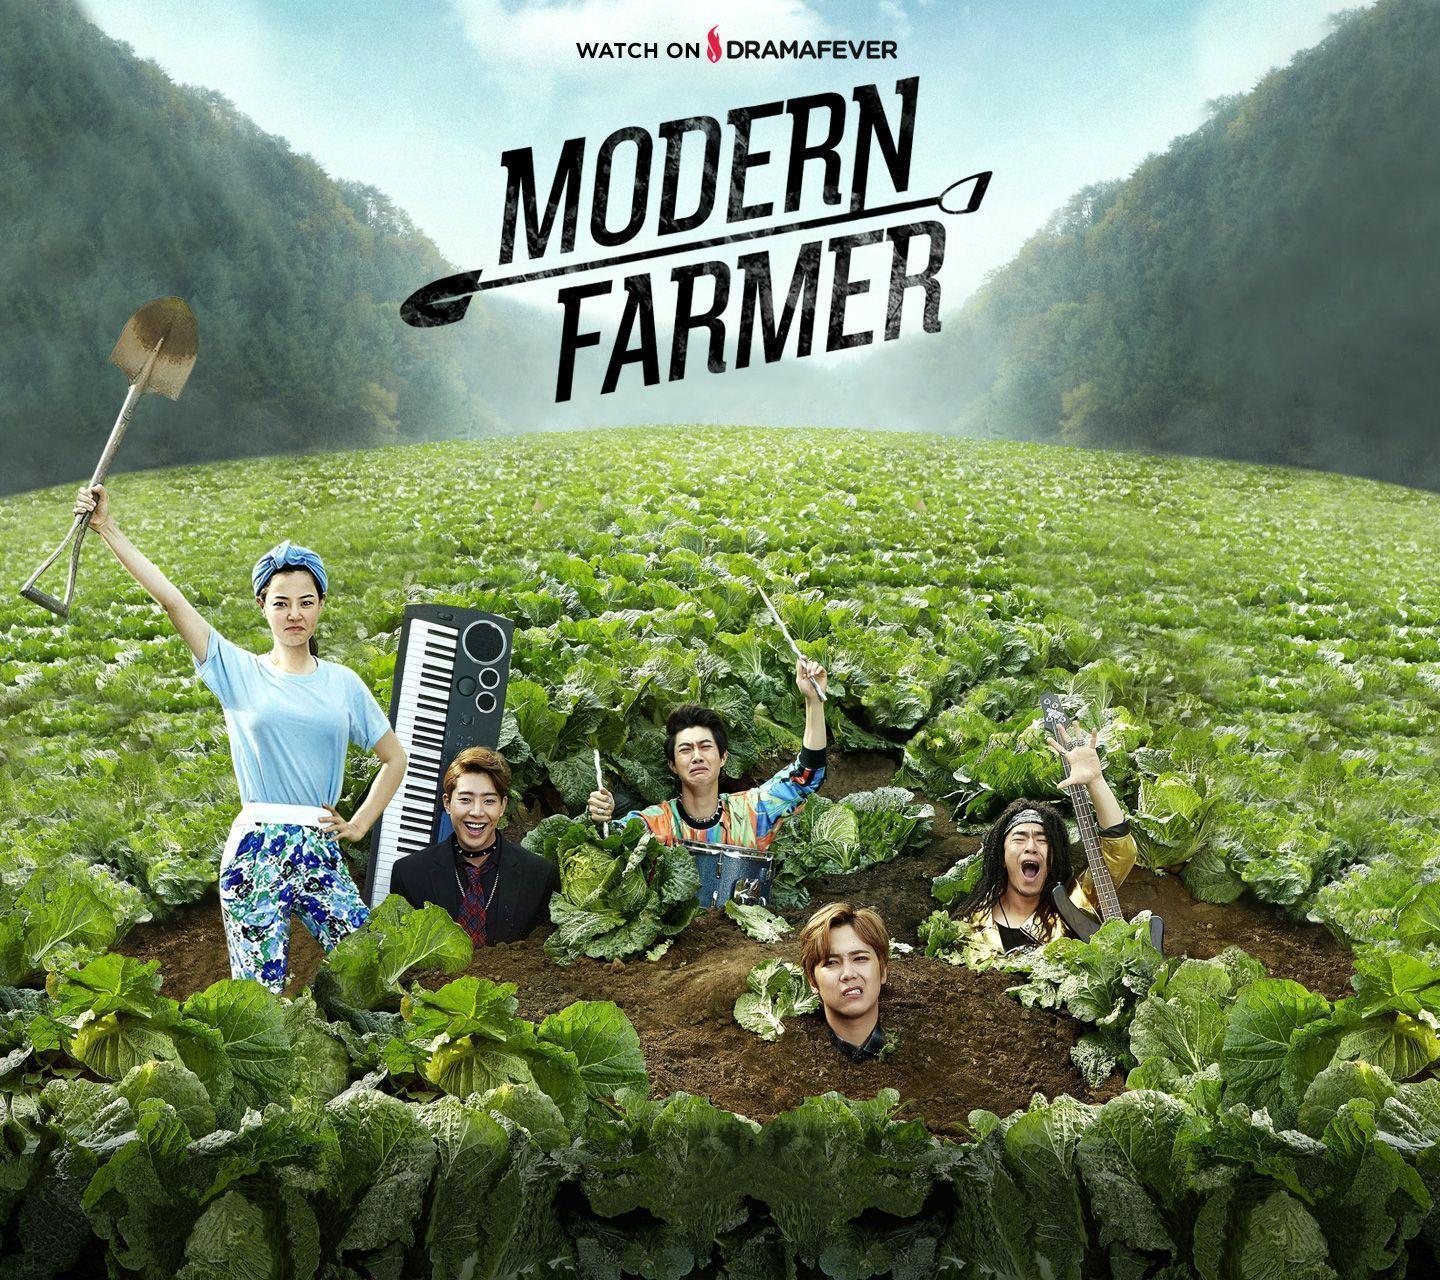 Download Modern Farmer wallpaper for your desktop, iPhone, iPad